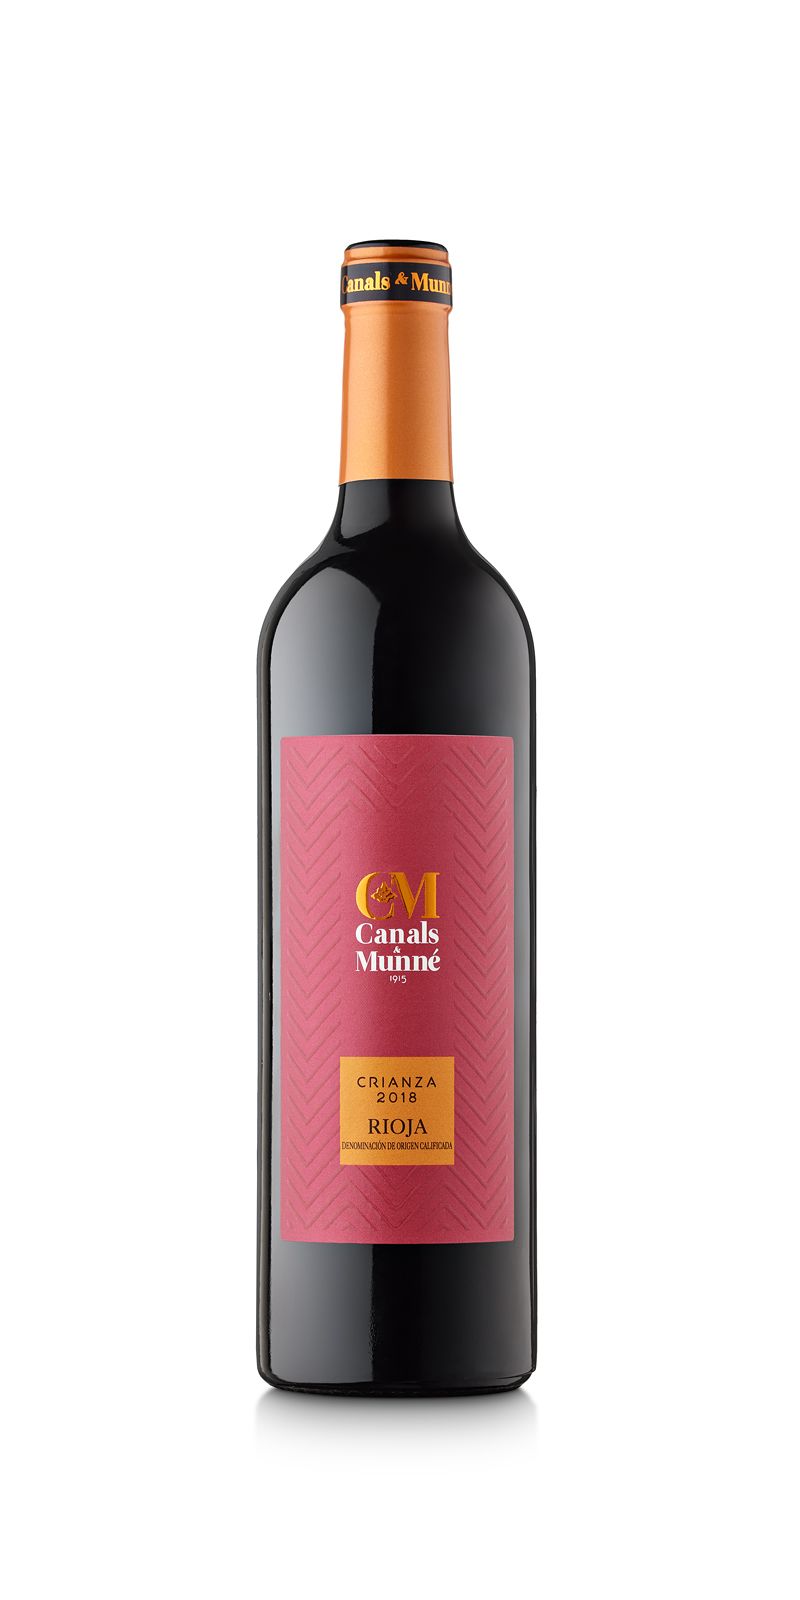 CANALS & MUNNE saca al mercado un vino Rioja crianza 2018   